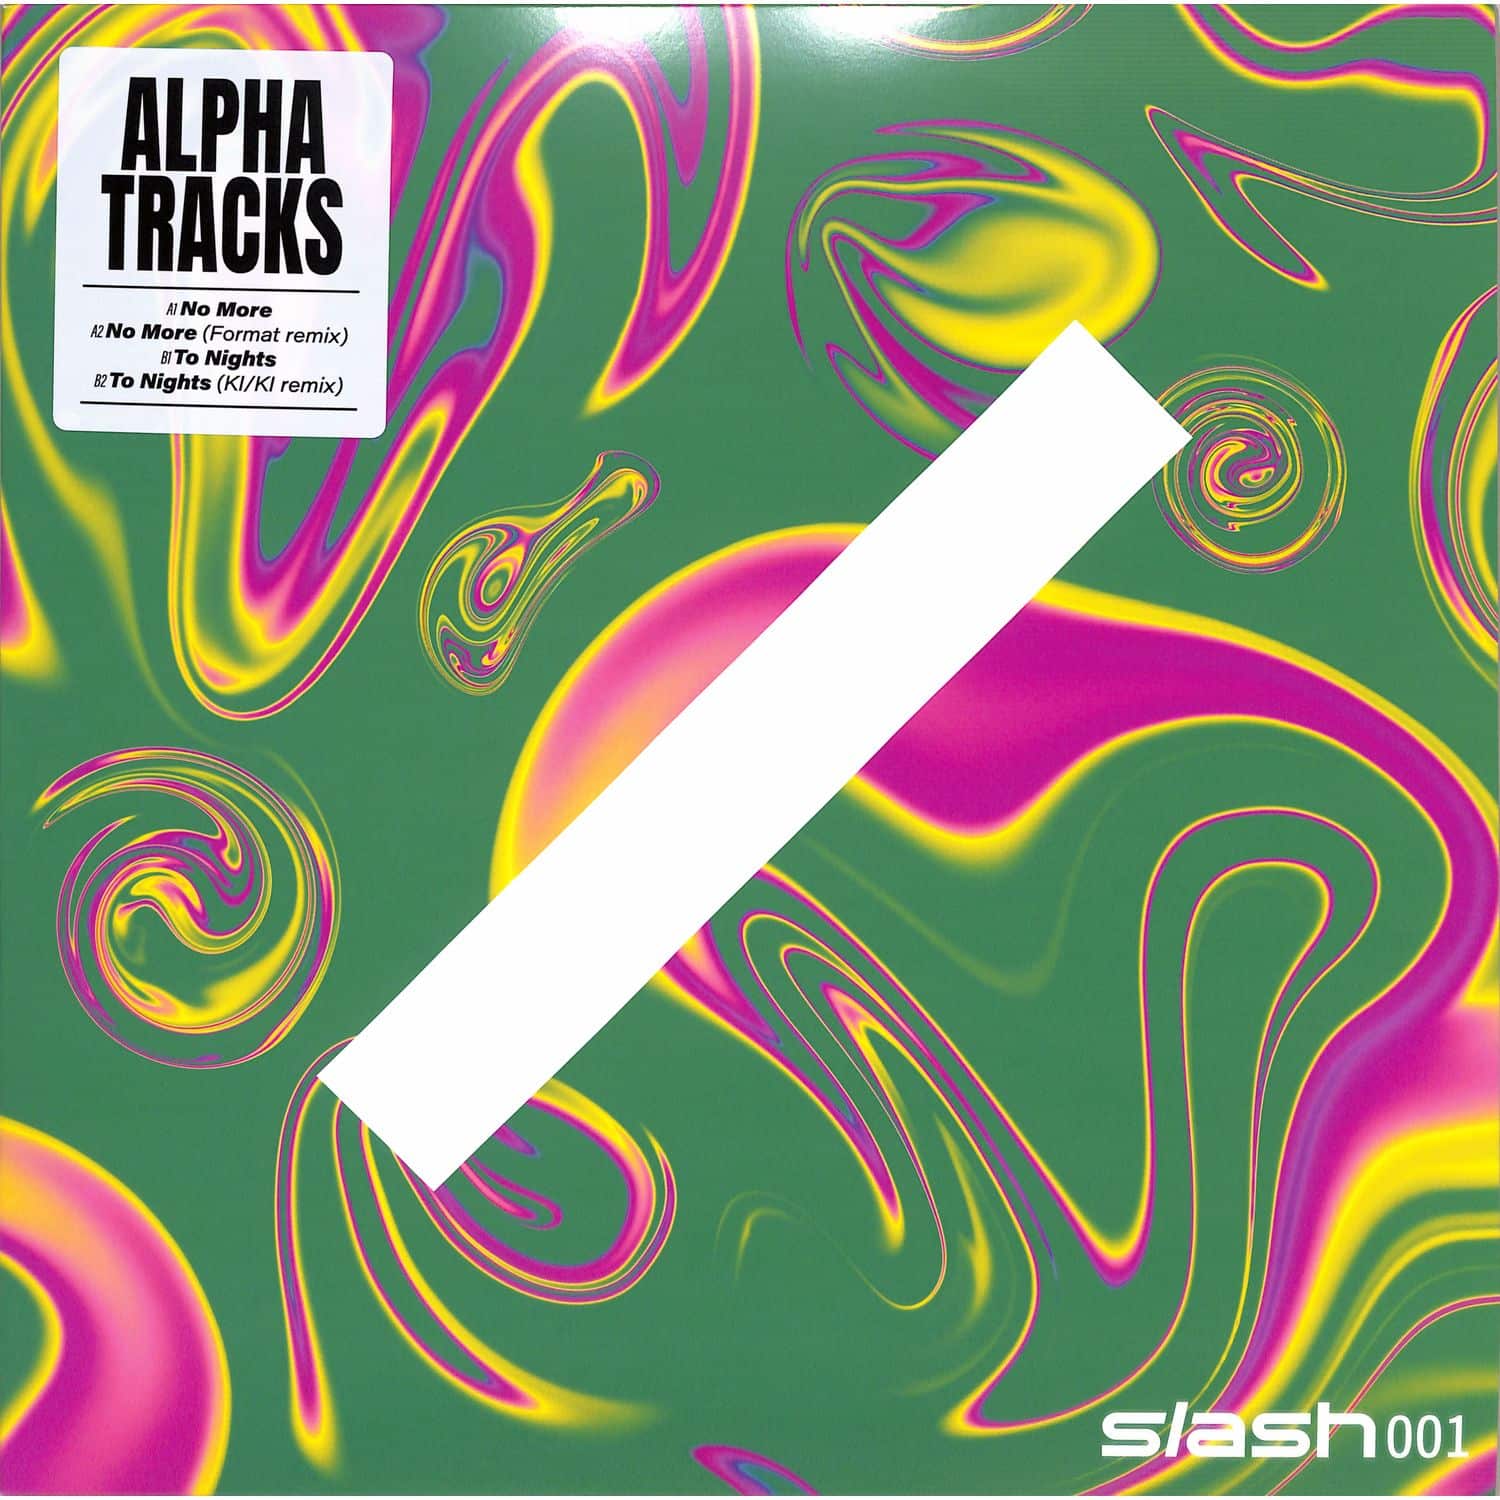 Alpha Tracks - SLASH 001